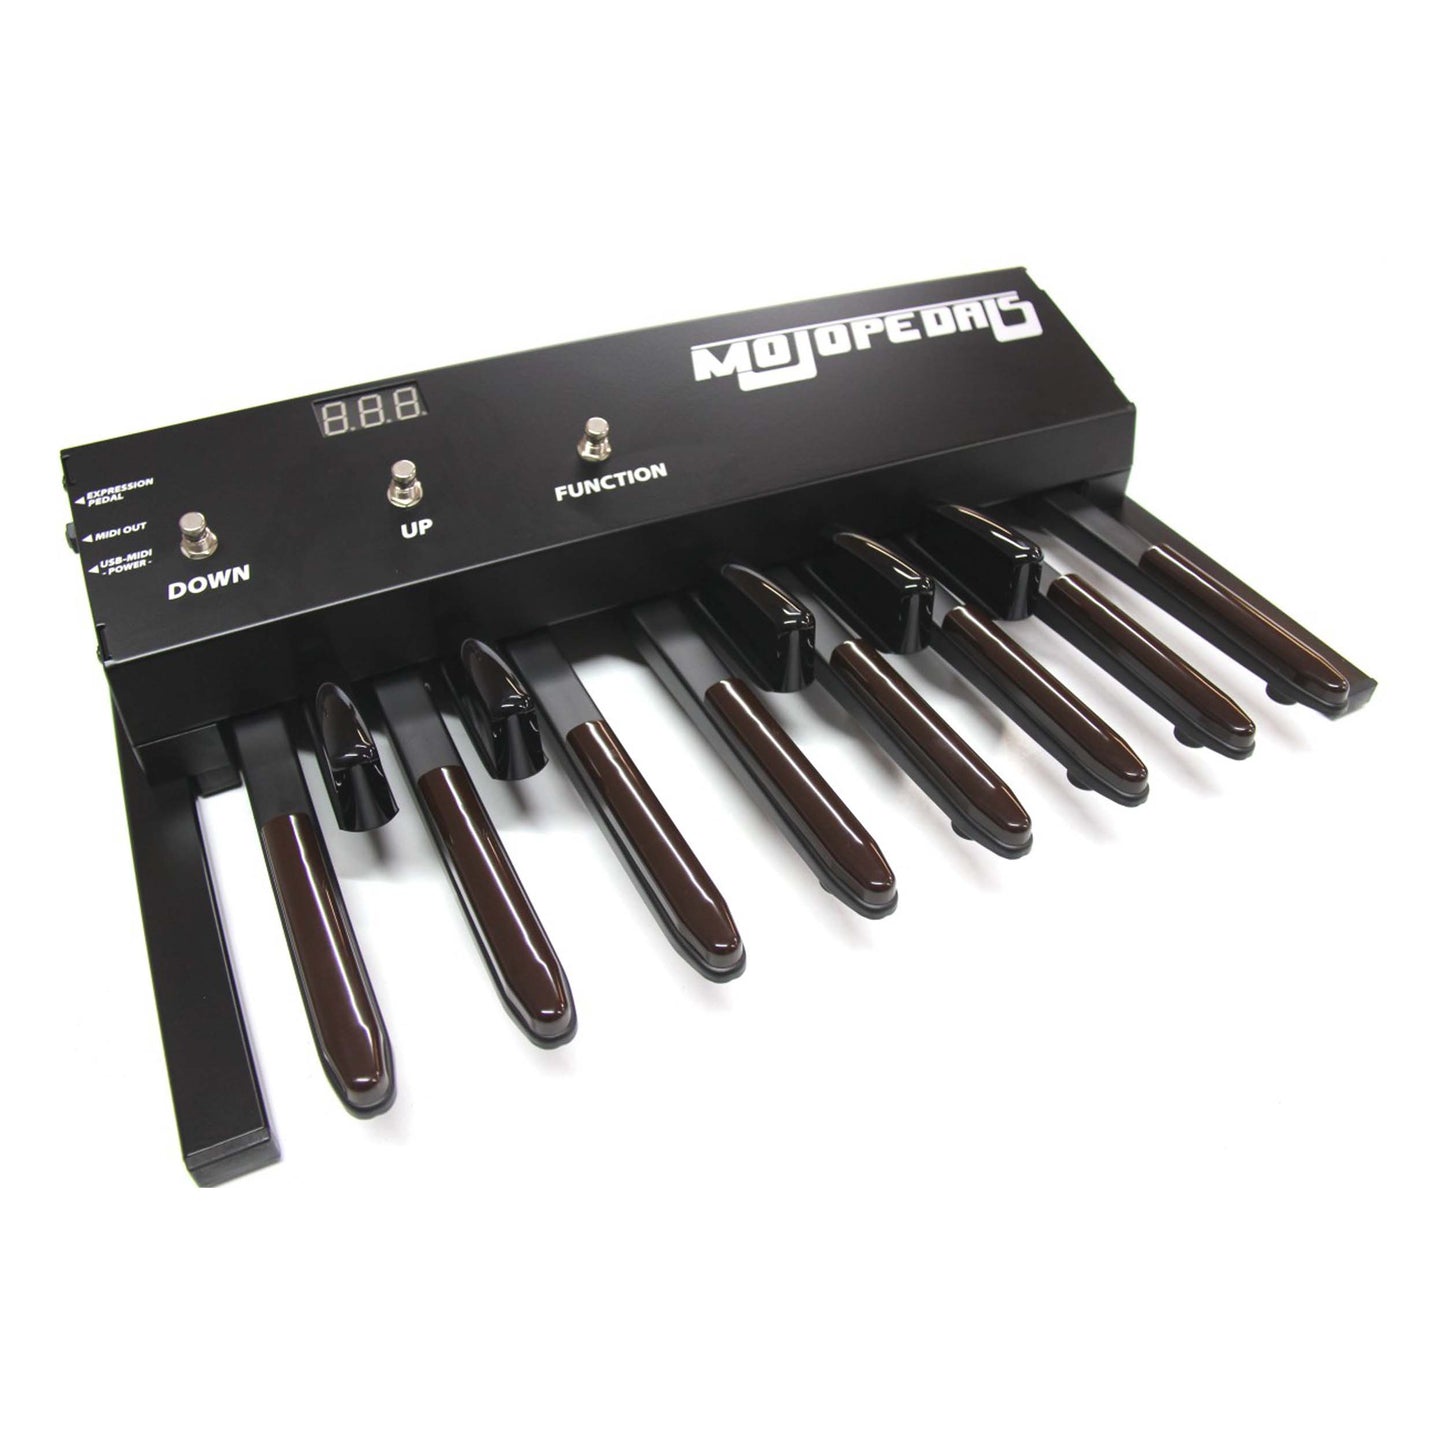 Crumar MojoPedals Midi USB Pedal Board with 13 Pedals